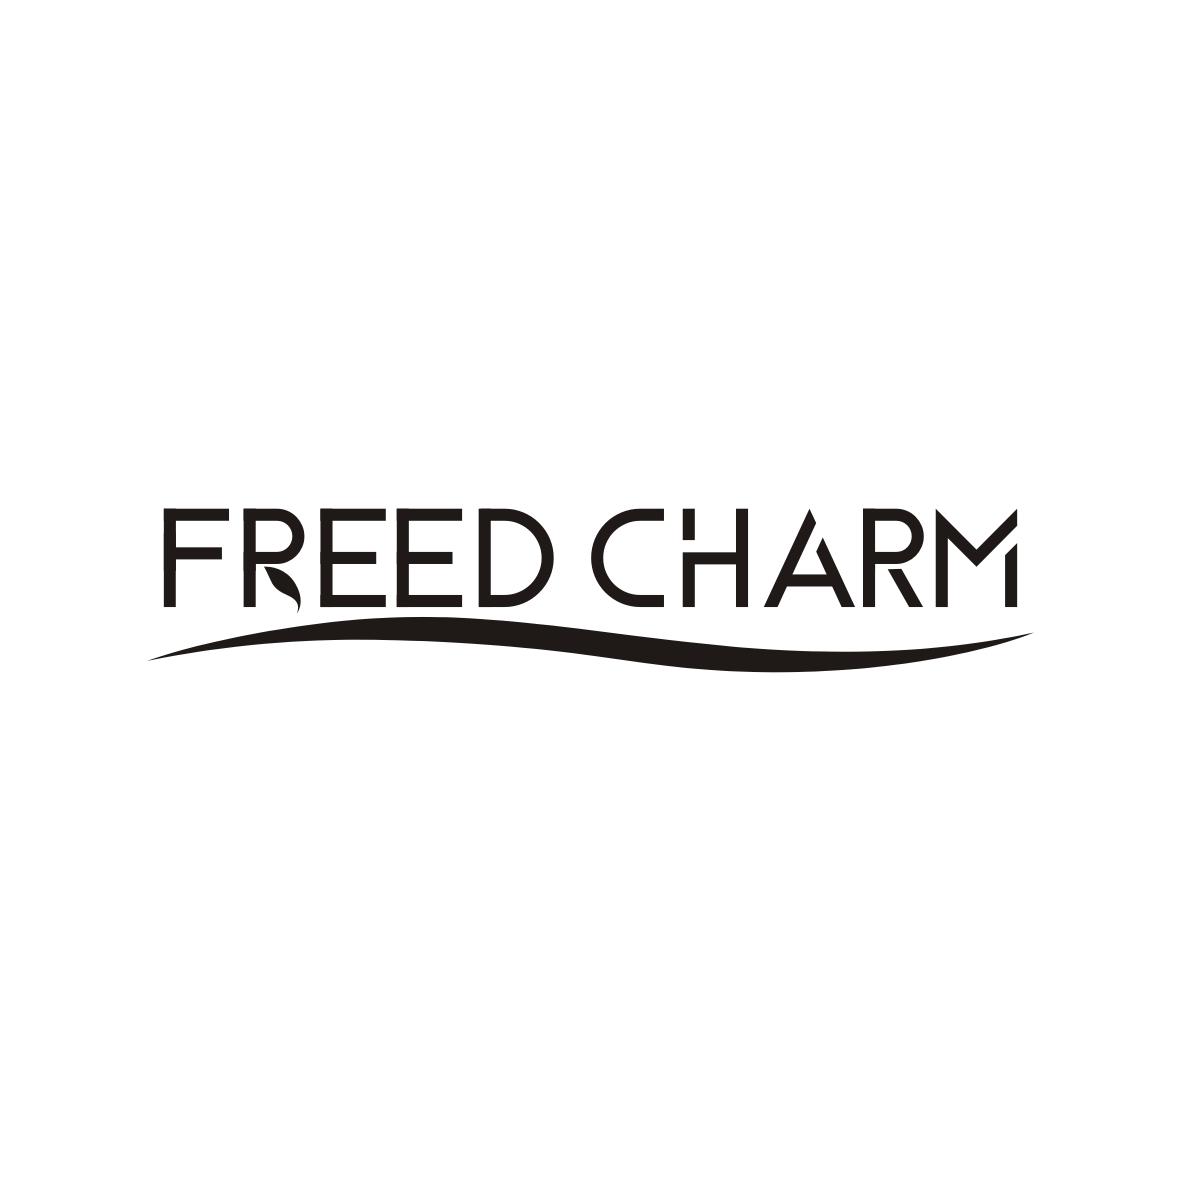 FREED CHARM